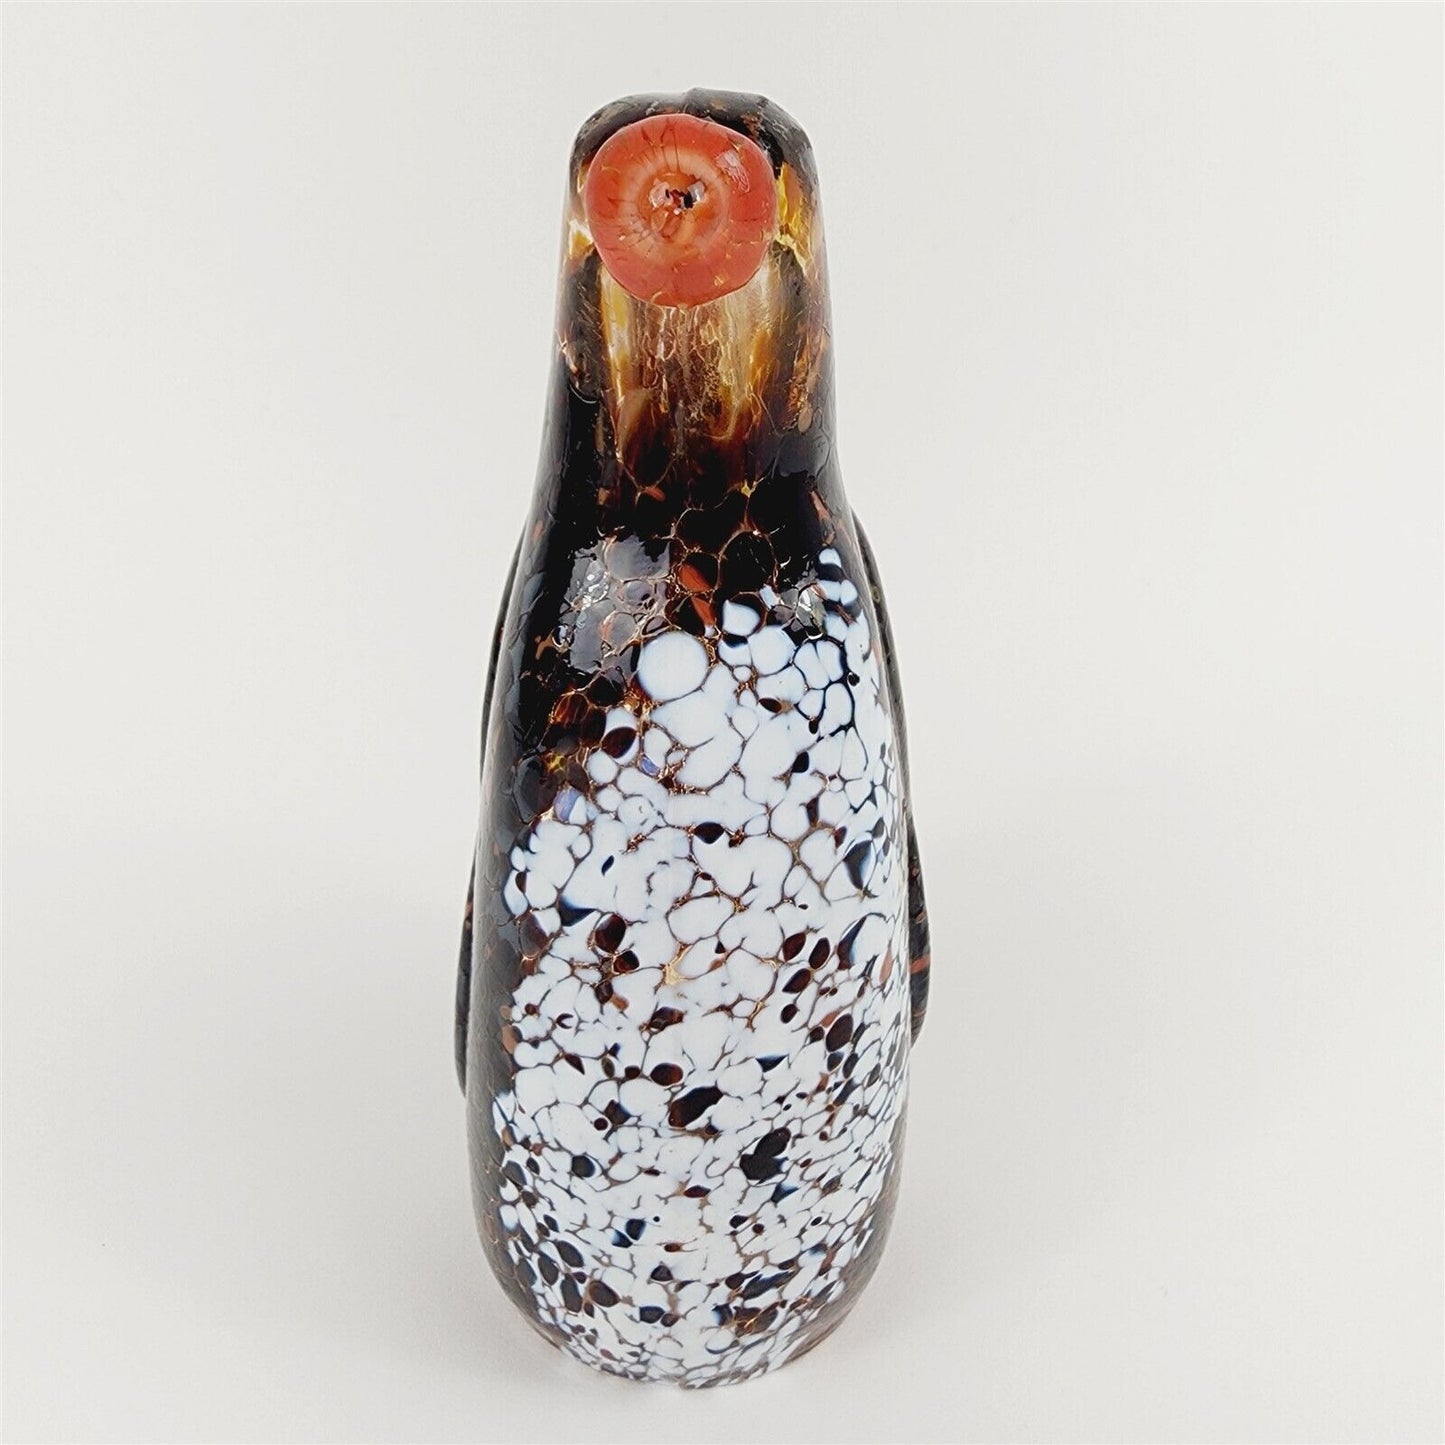 Vintage Kosta Boda Art Glass Penguin Puffin Figurine Home Decor - 6 1/4"